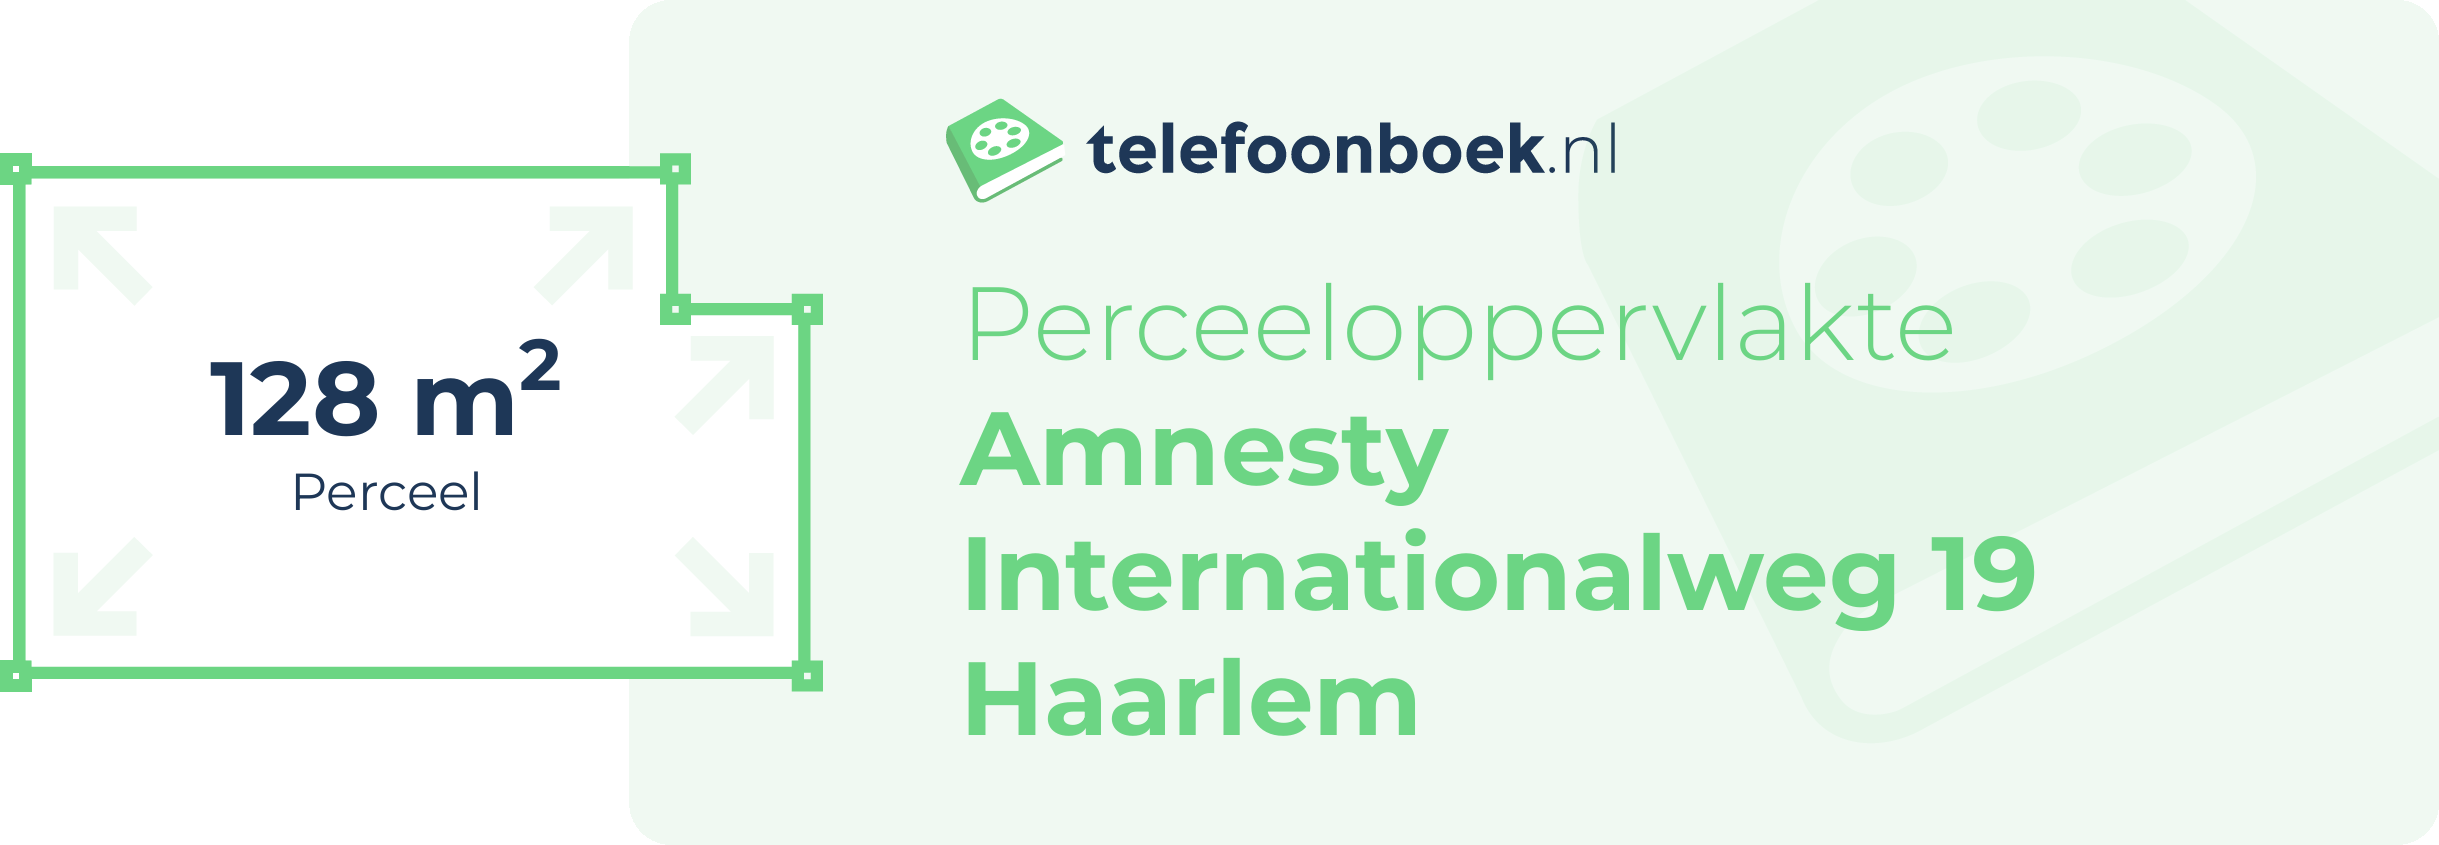 Perceeloppervlakte Amnesty Internationalweg 19 Haarlem